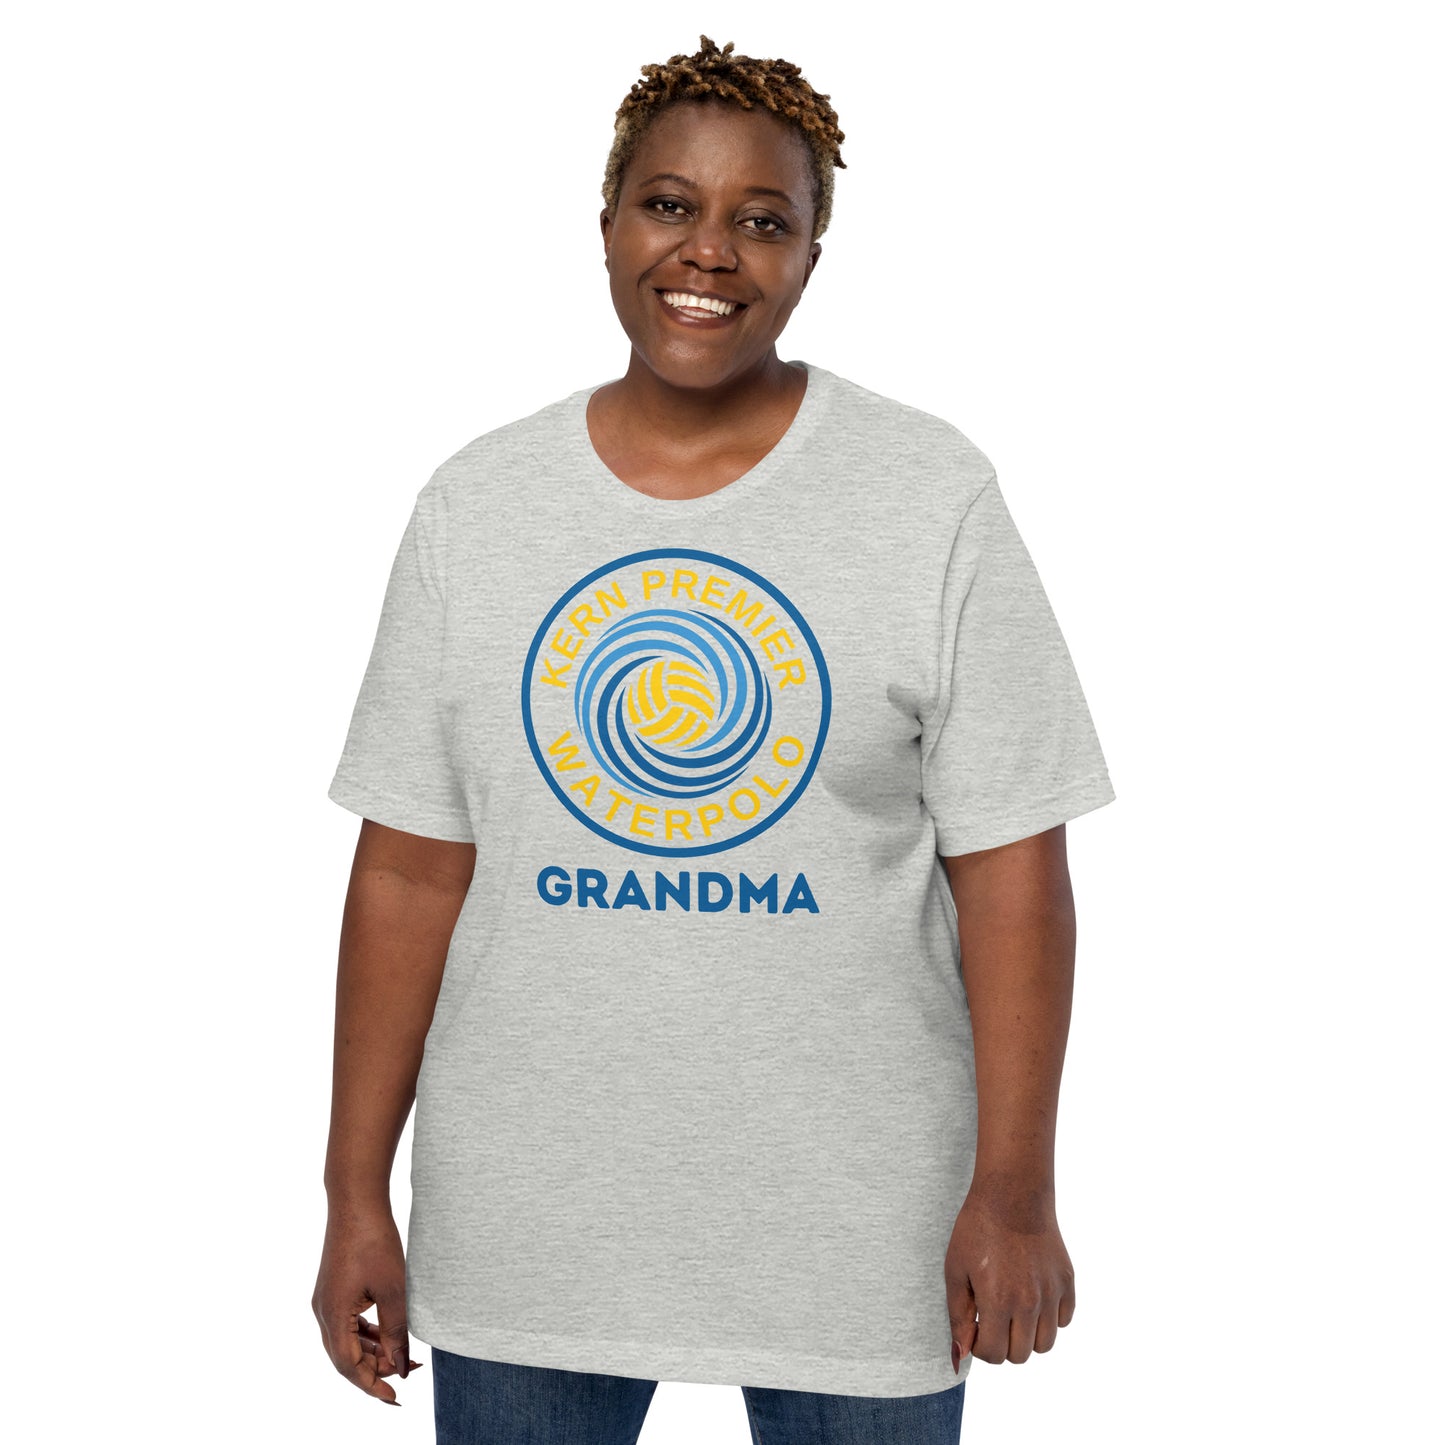 Kern Premier Grandma - Circle Logo - Unisex Soft T-shirt - Bella Canvas 3001